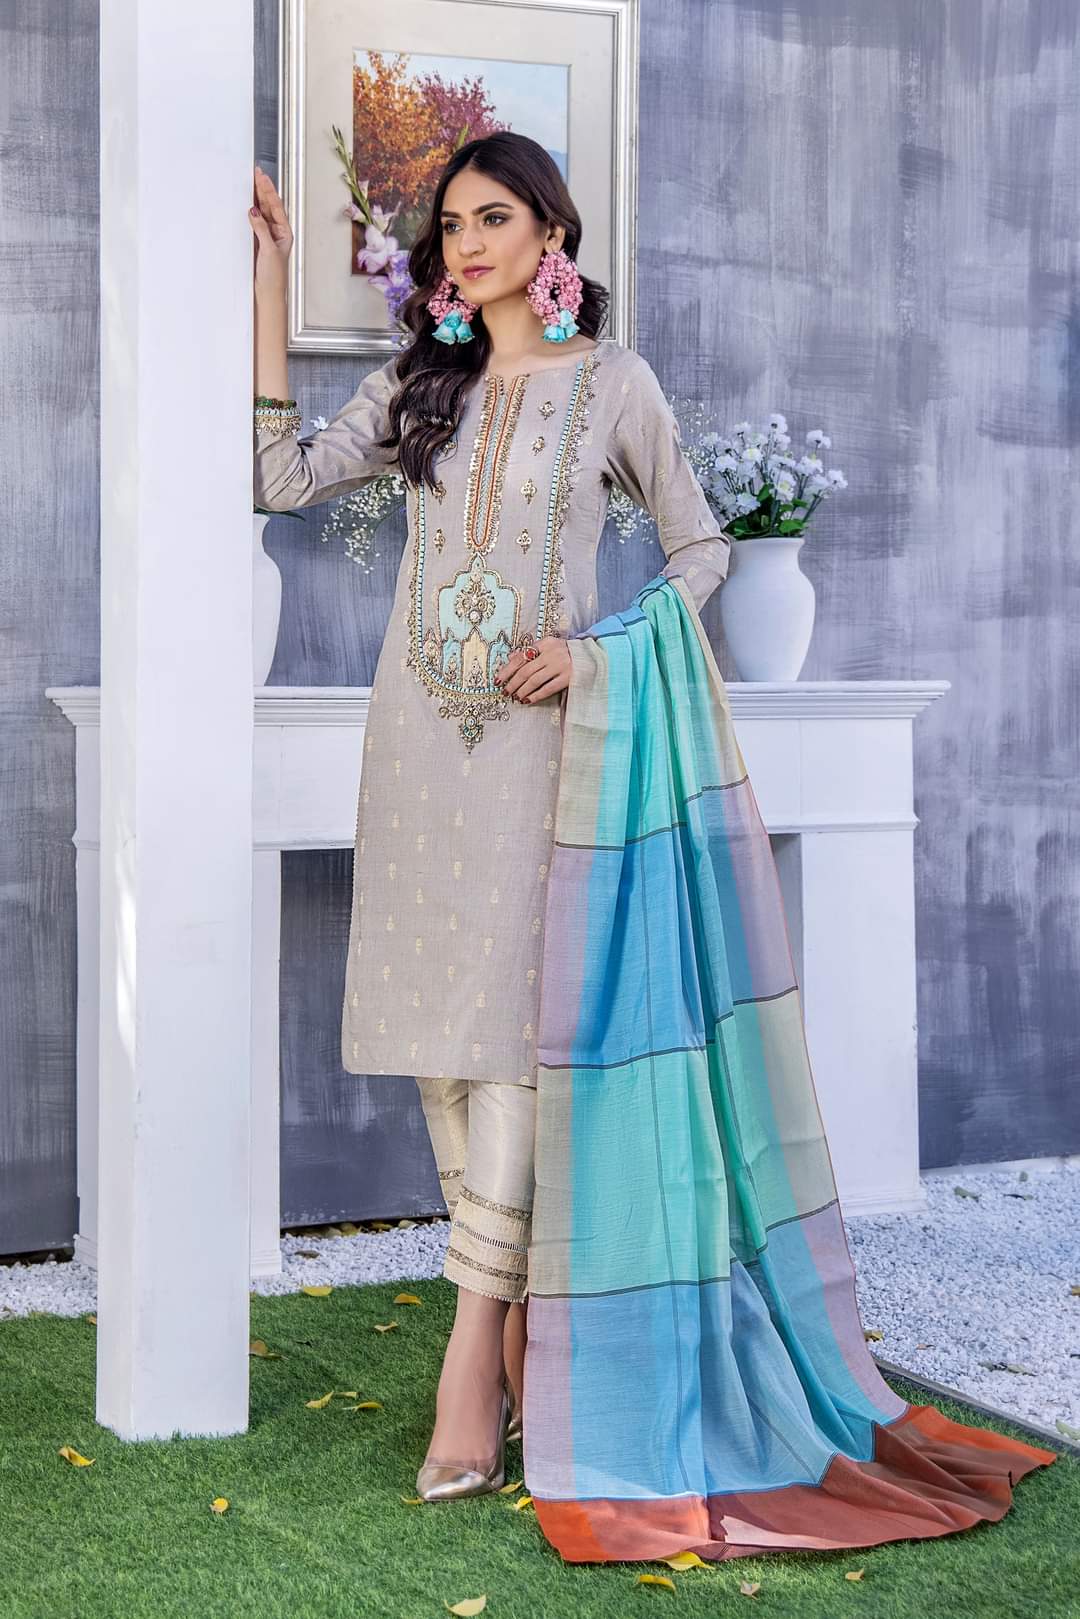  Khuda Baksh - Pakistani clothes